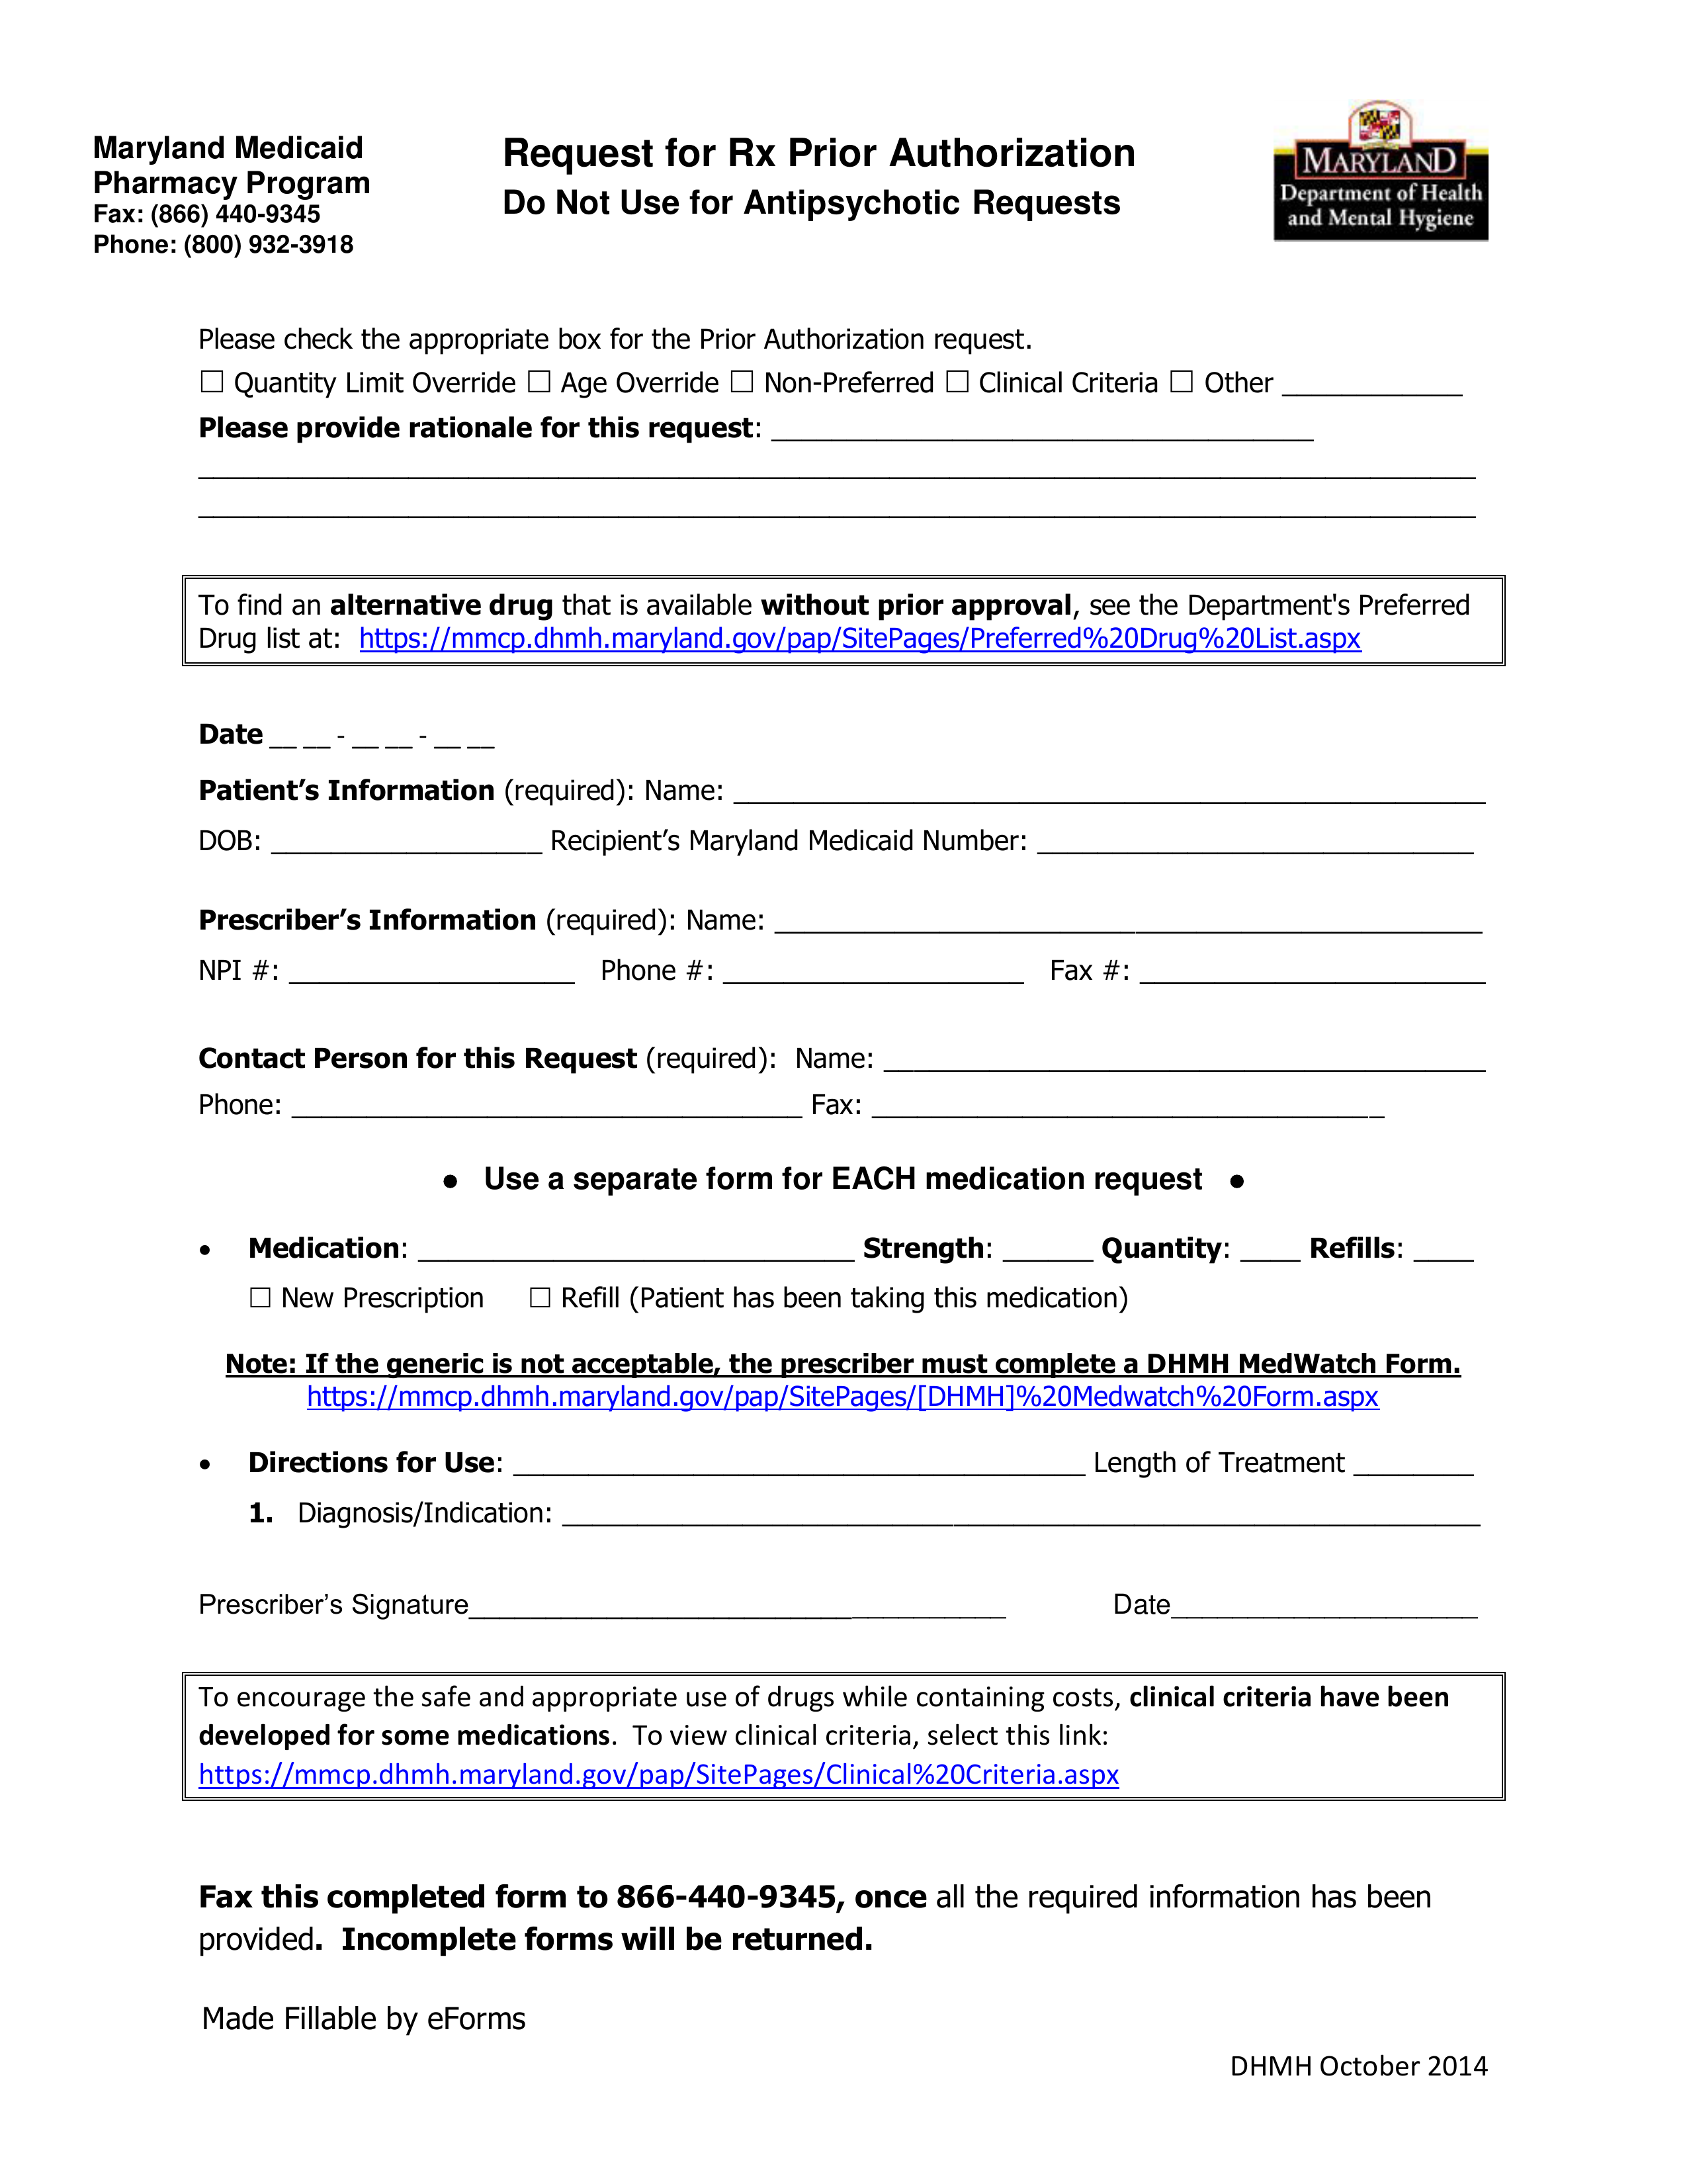 Maryland Medicaid Prior (Rx) Authorization Form